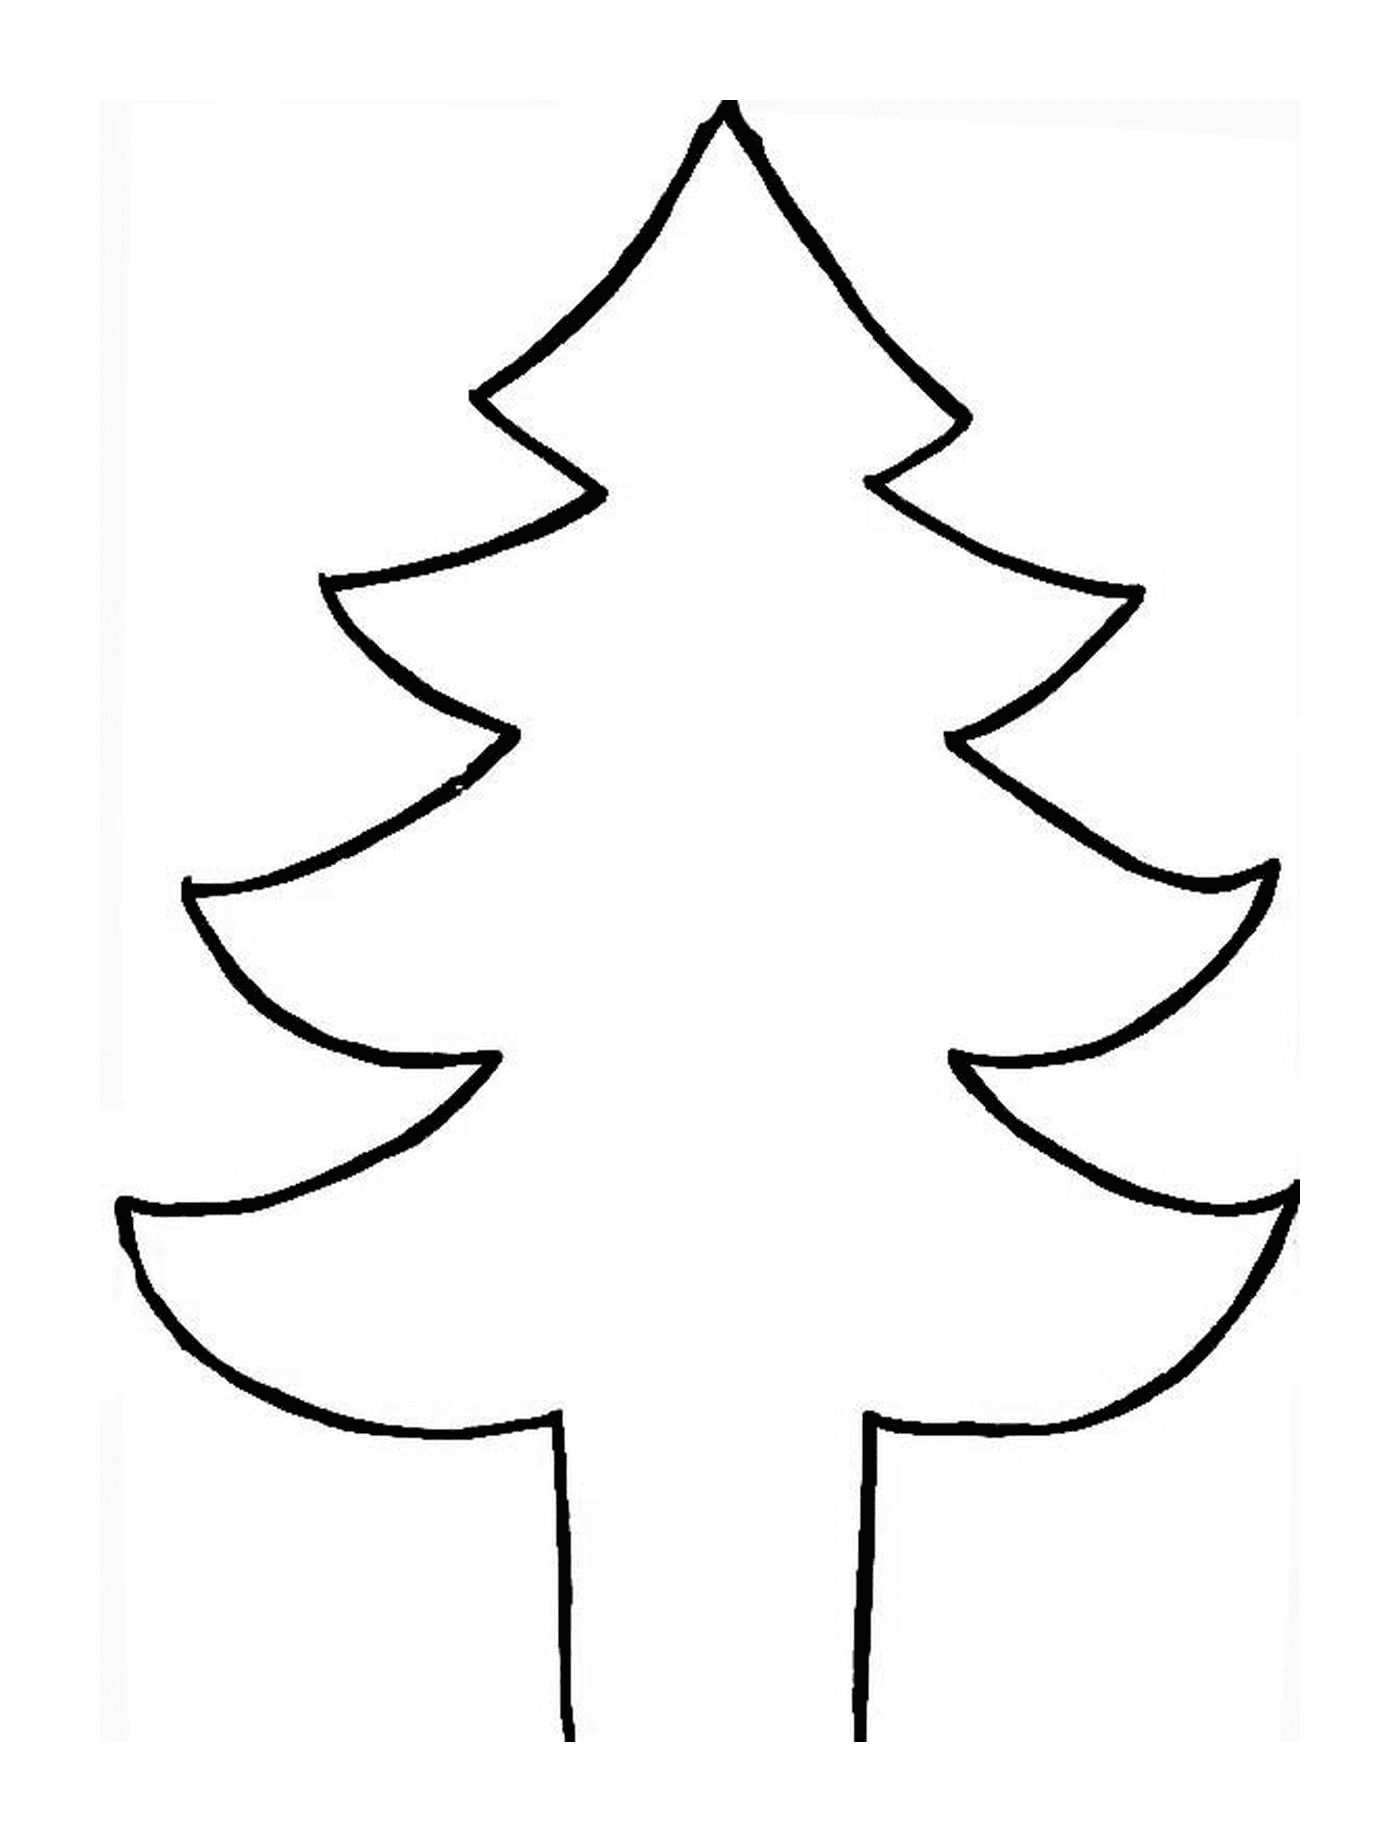  A classic Christmas tree 